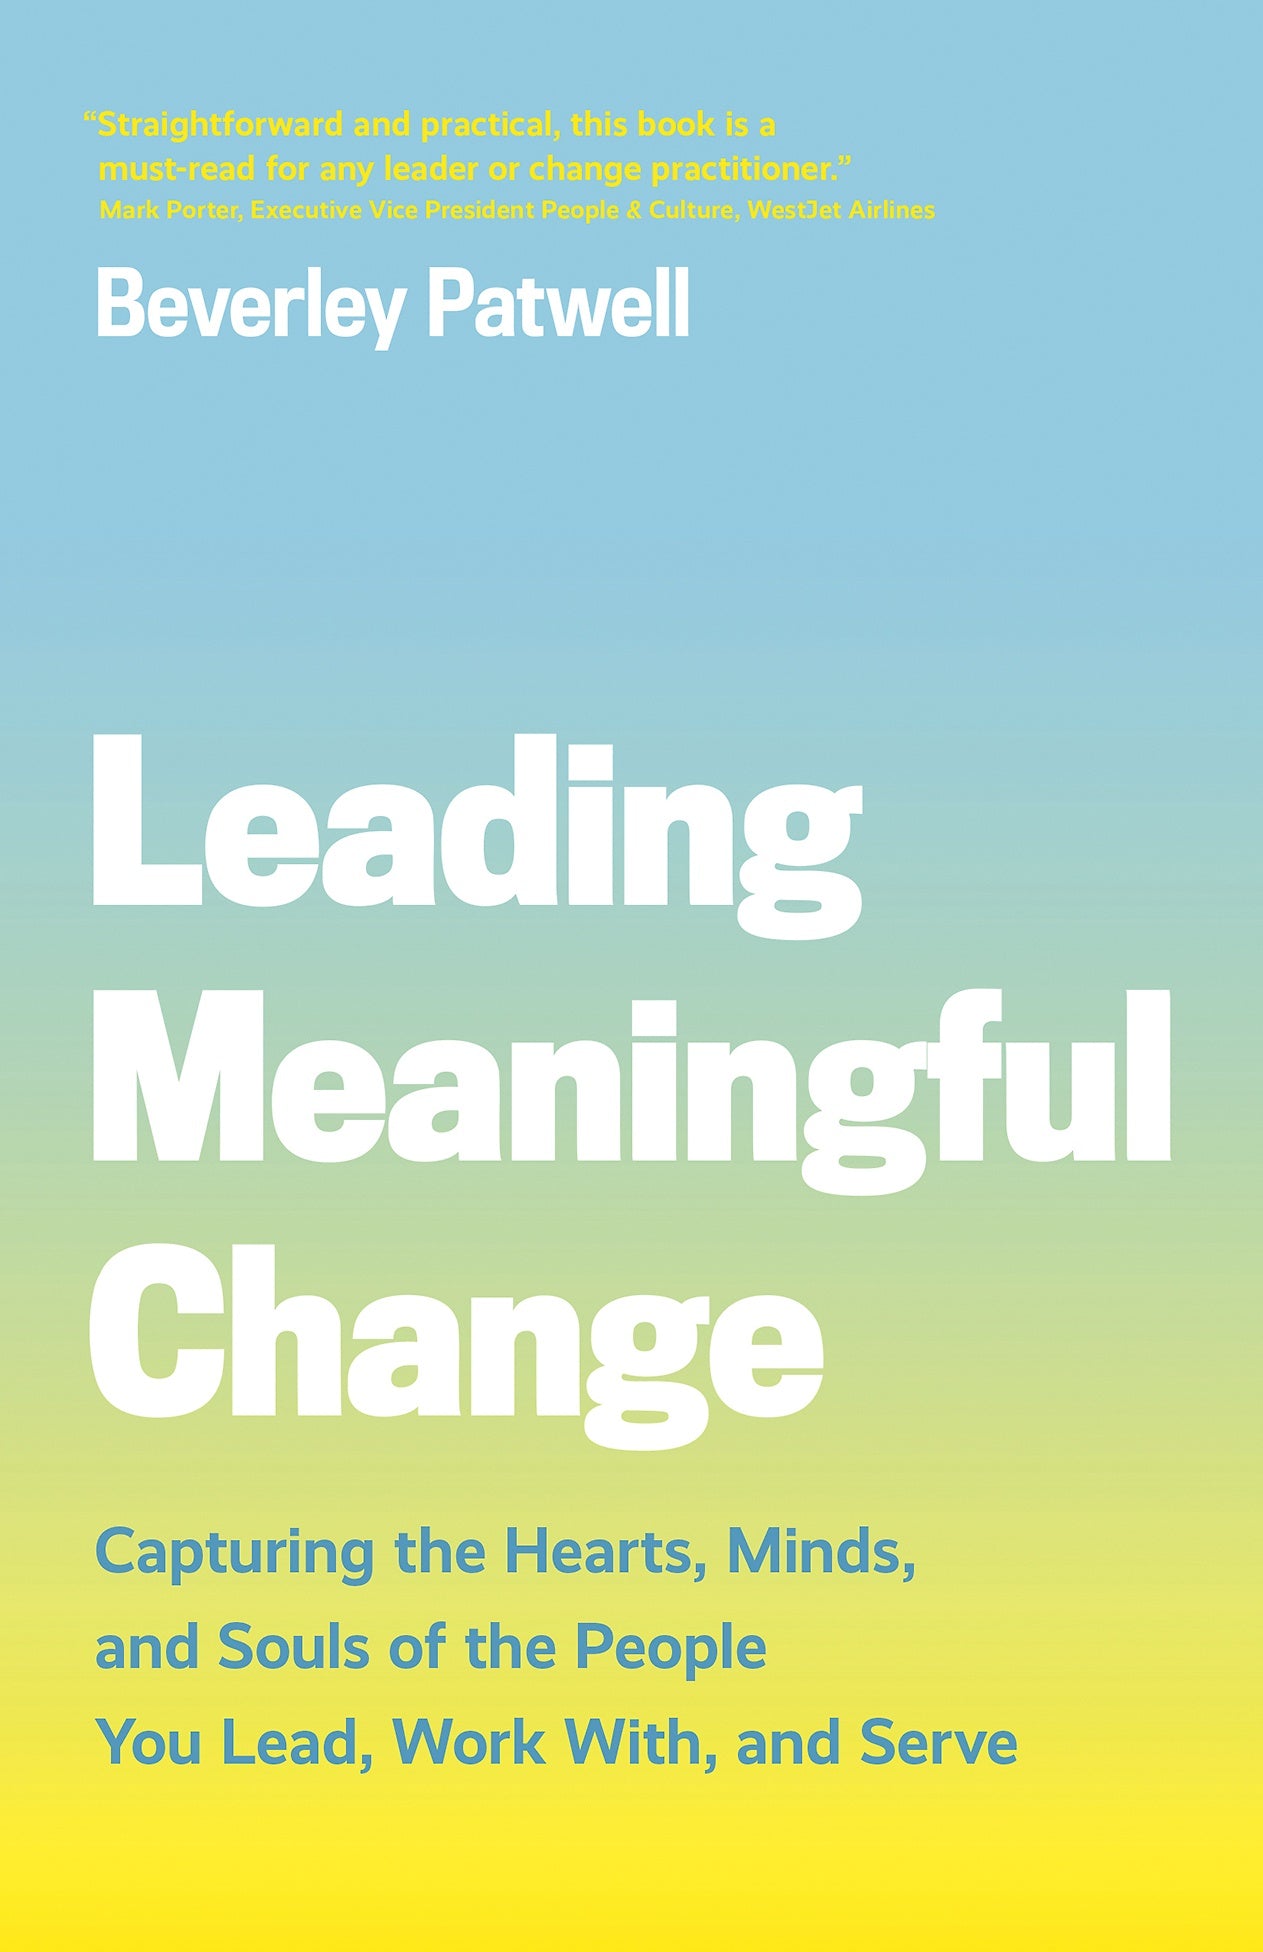 Leading Meaningful Change